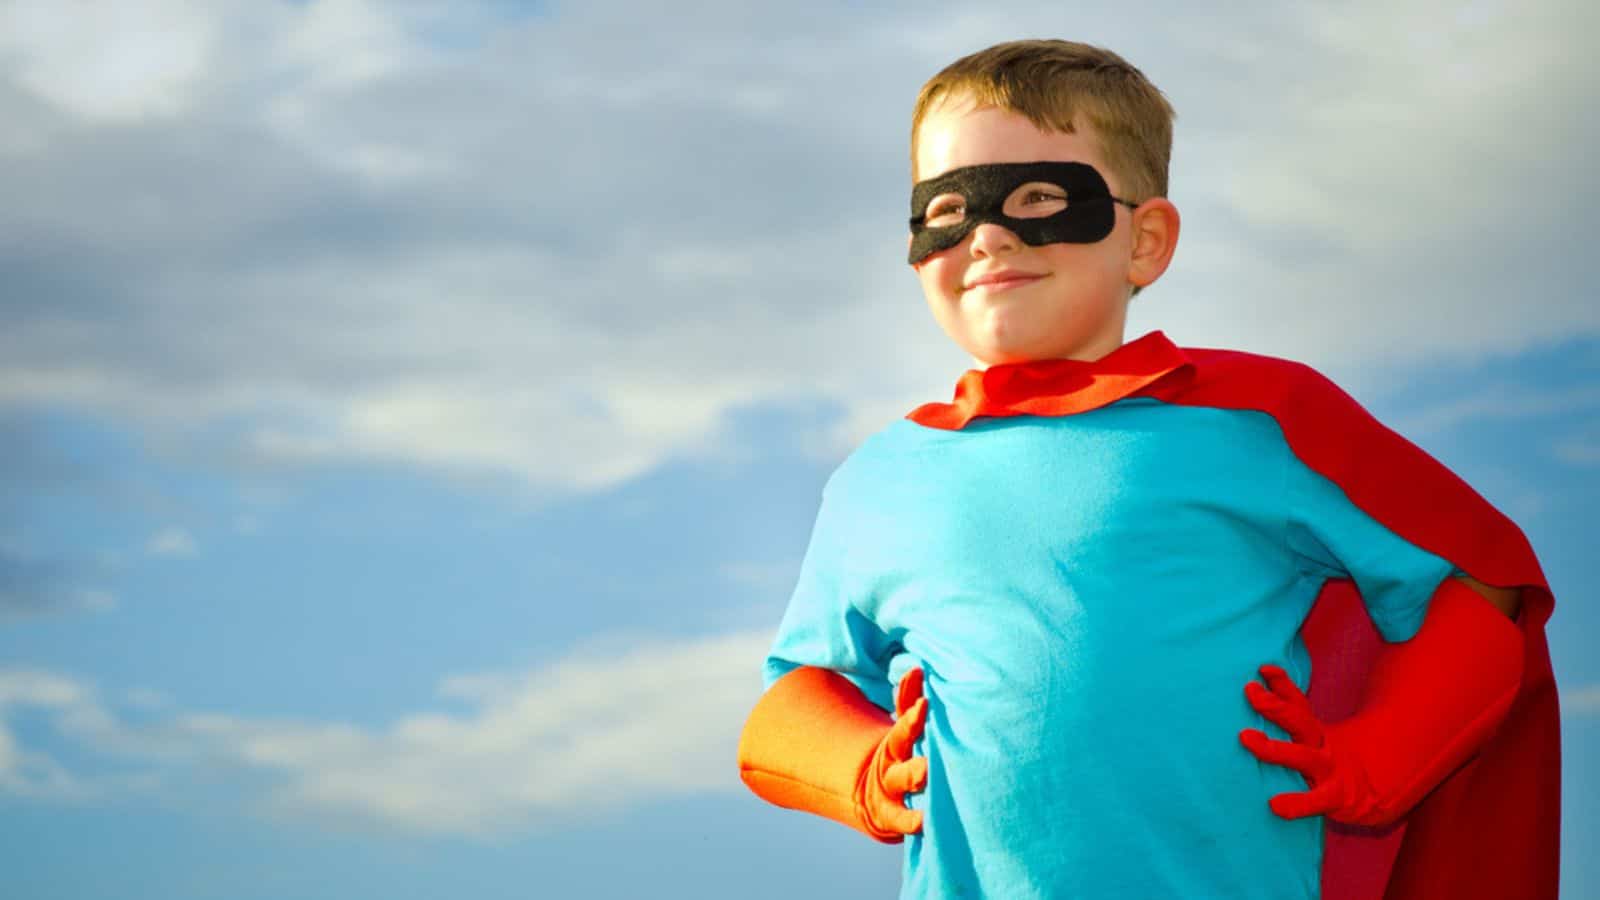 Child pretending to be a superhero